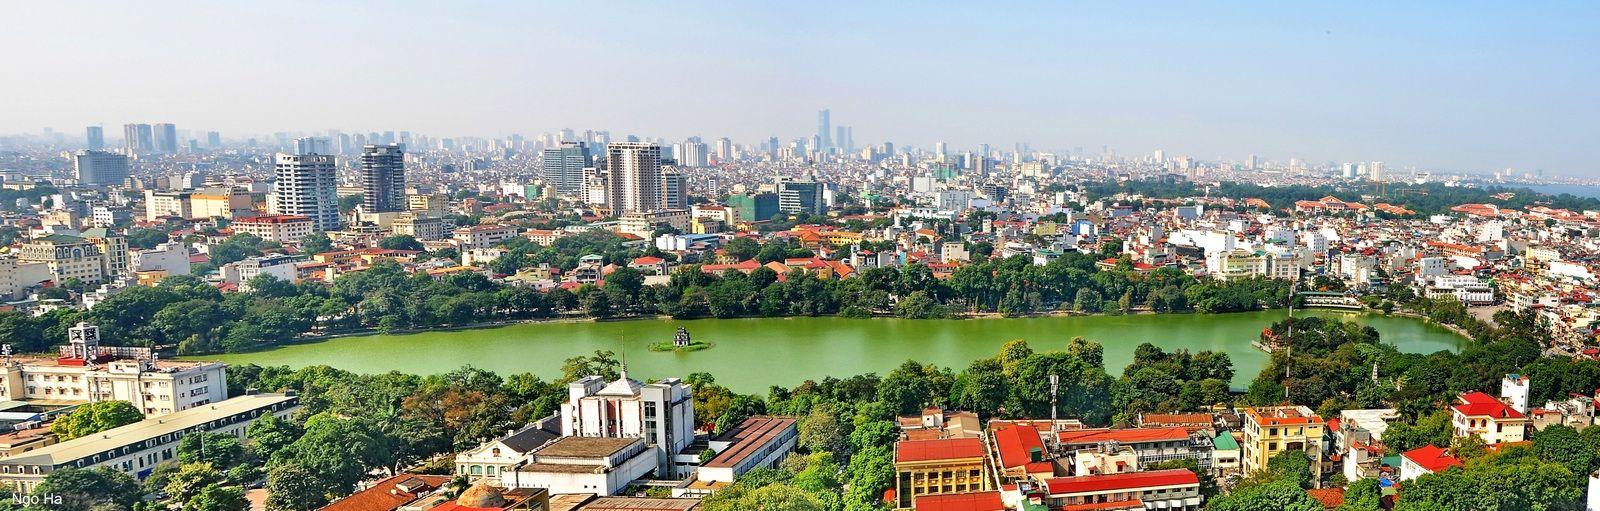 The Hanoi city photo and hotels